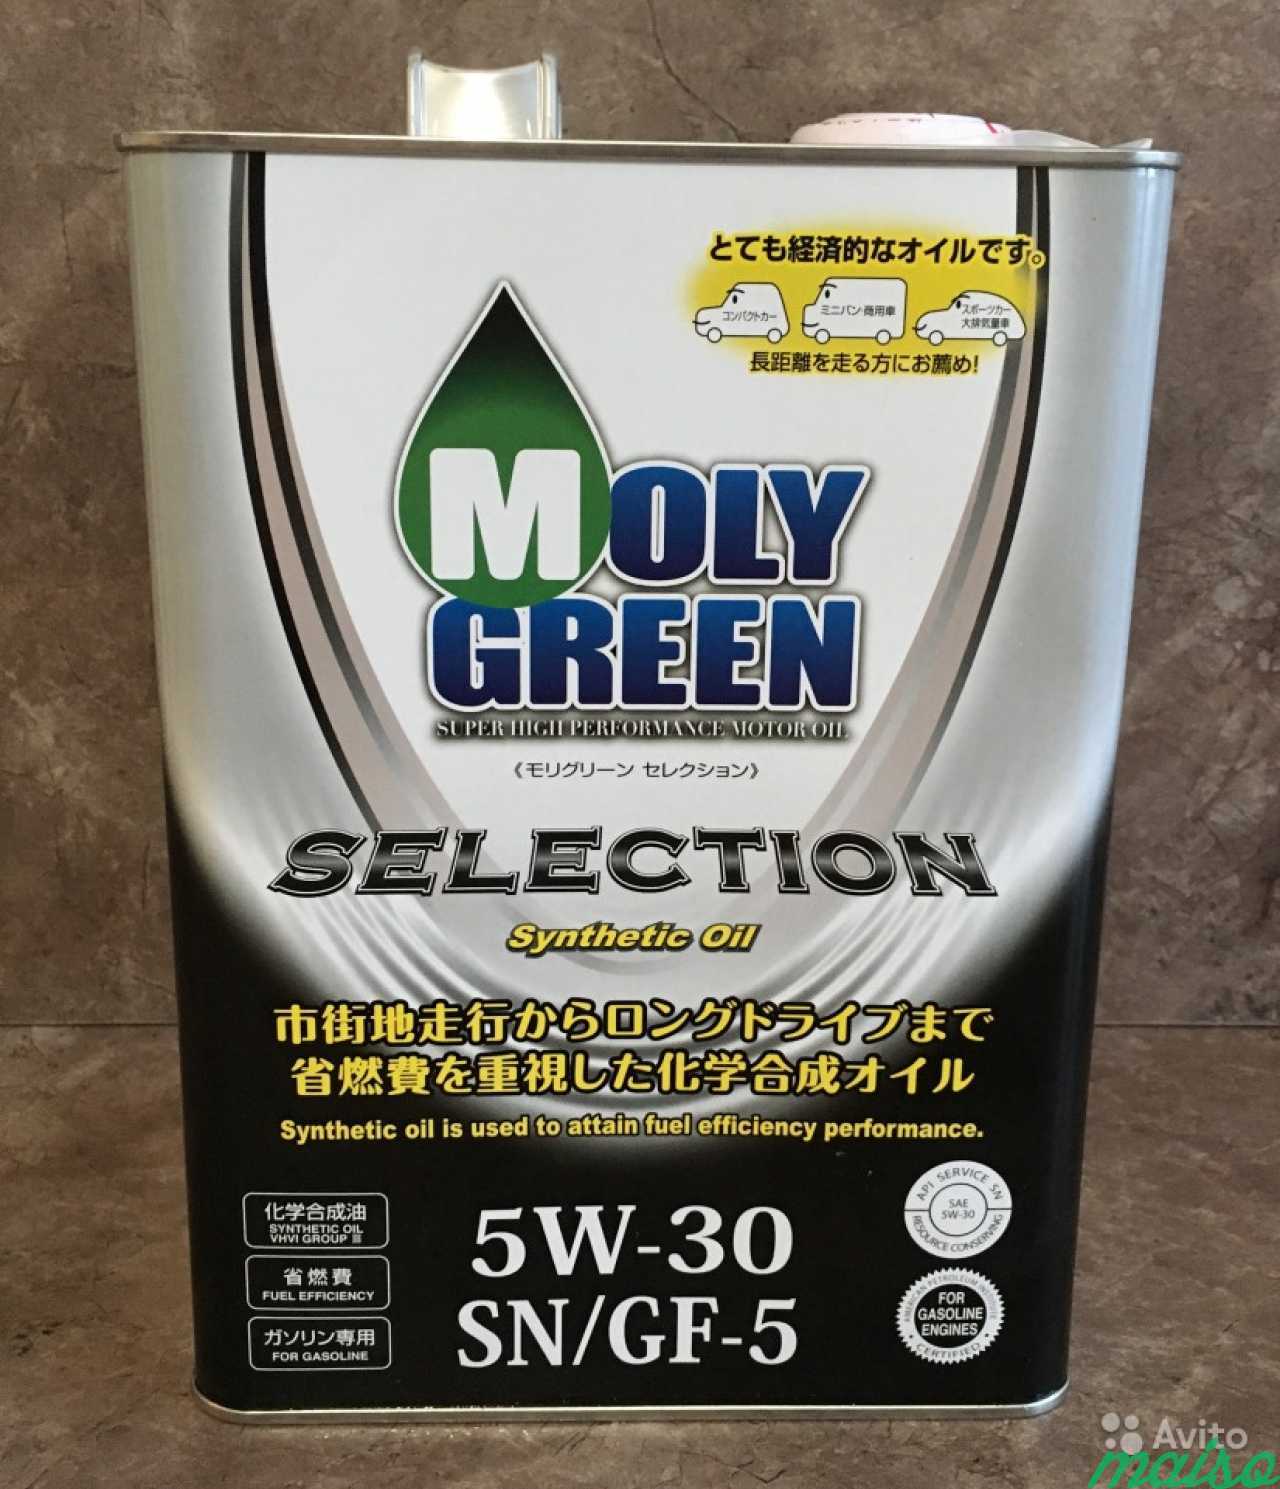 Моли грин 5w30 купить. Moly Green 5w30 selection. Масло моторное Moly Green selection SN/gf-5 5w30 (4.0l) (6шт/кор). Moly Green selection 5w-30 4л. Молли Грин SN 5w-30.